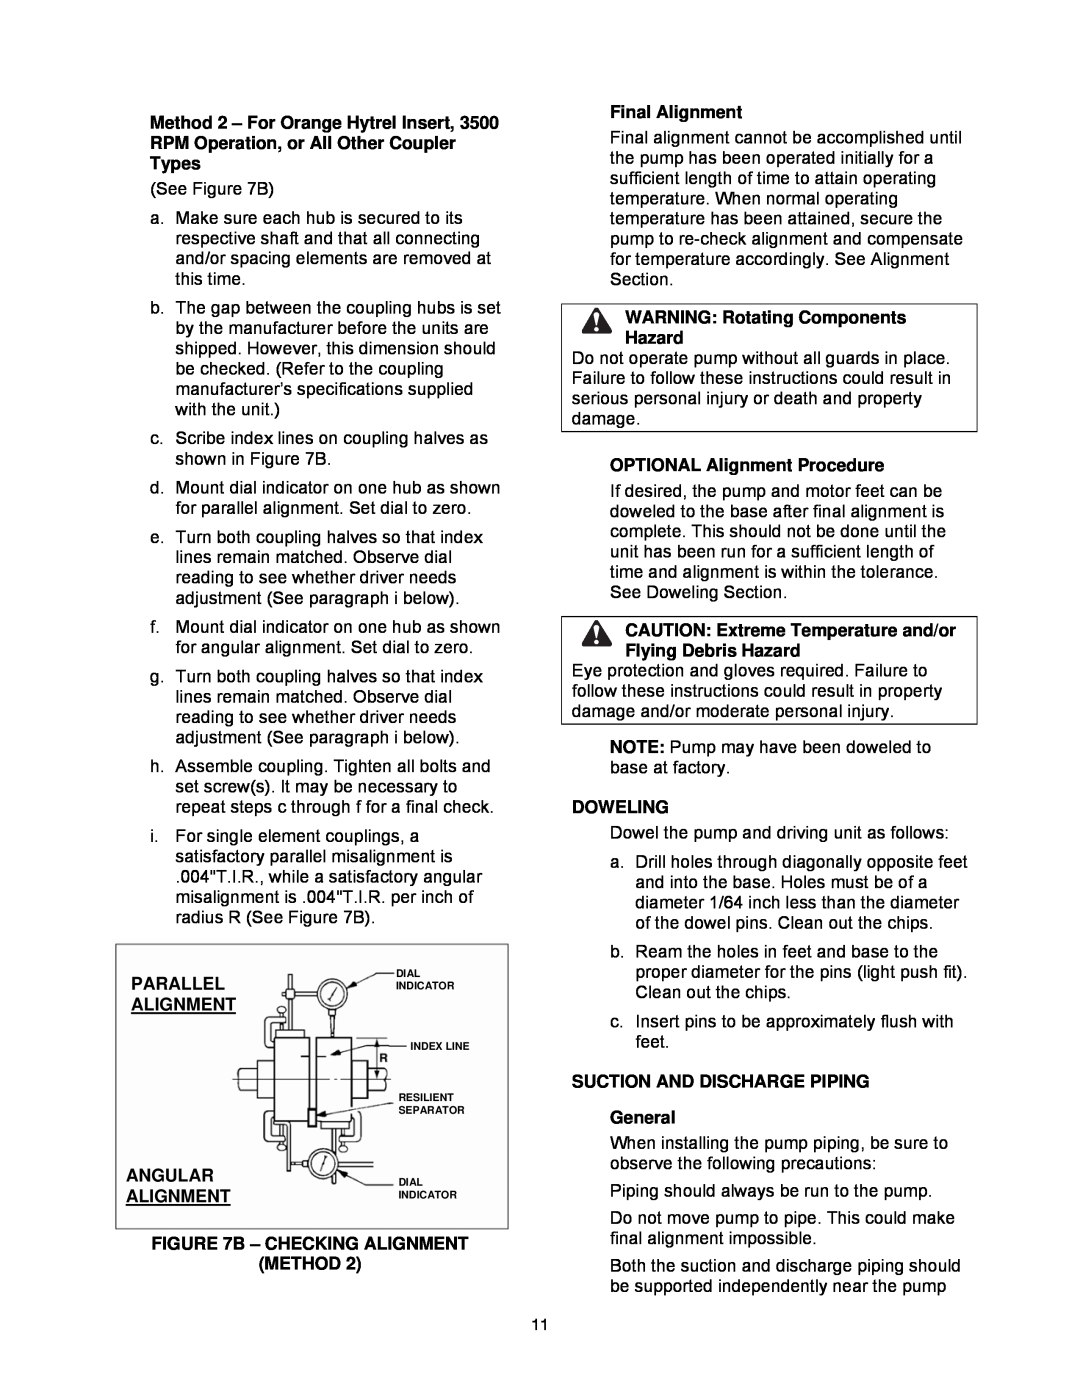 AC International 8200 Series Parallelindicator Alignment, Angulardial, B - Checking Alignment Method, Final Alignment 